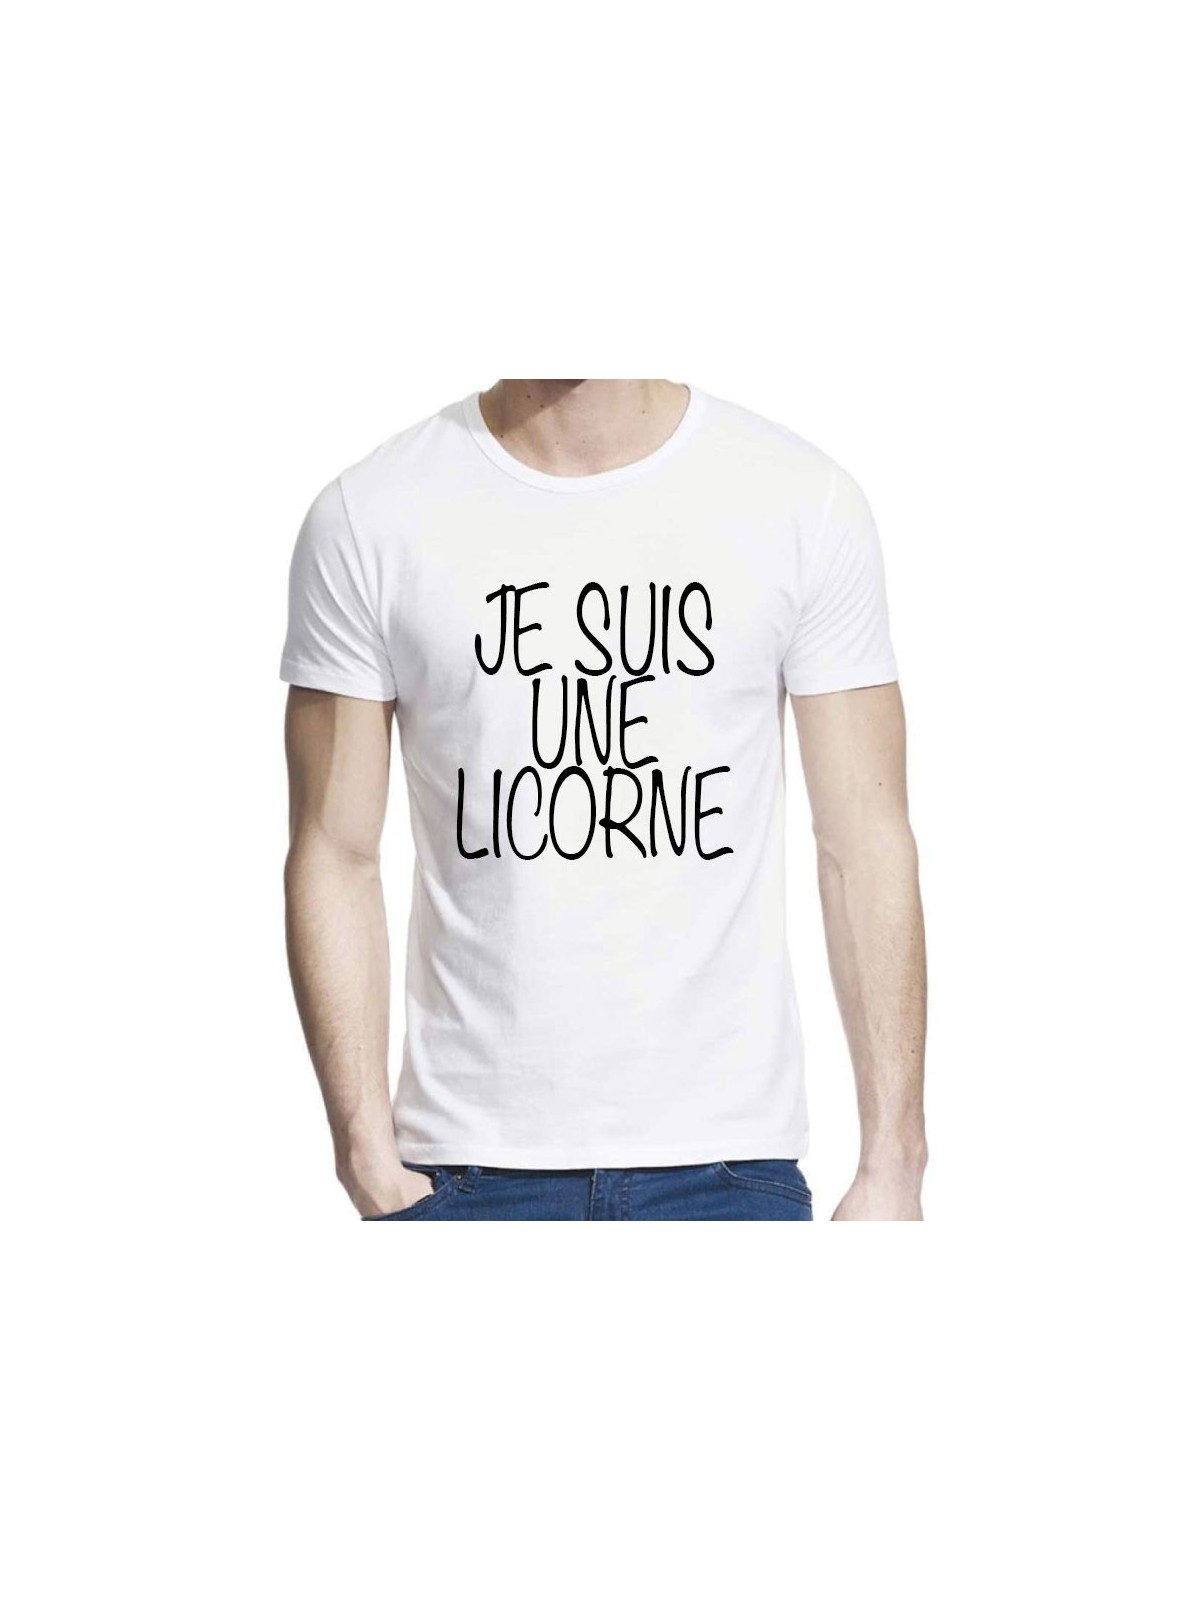 T-Shirt licorne ref 802